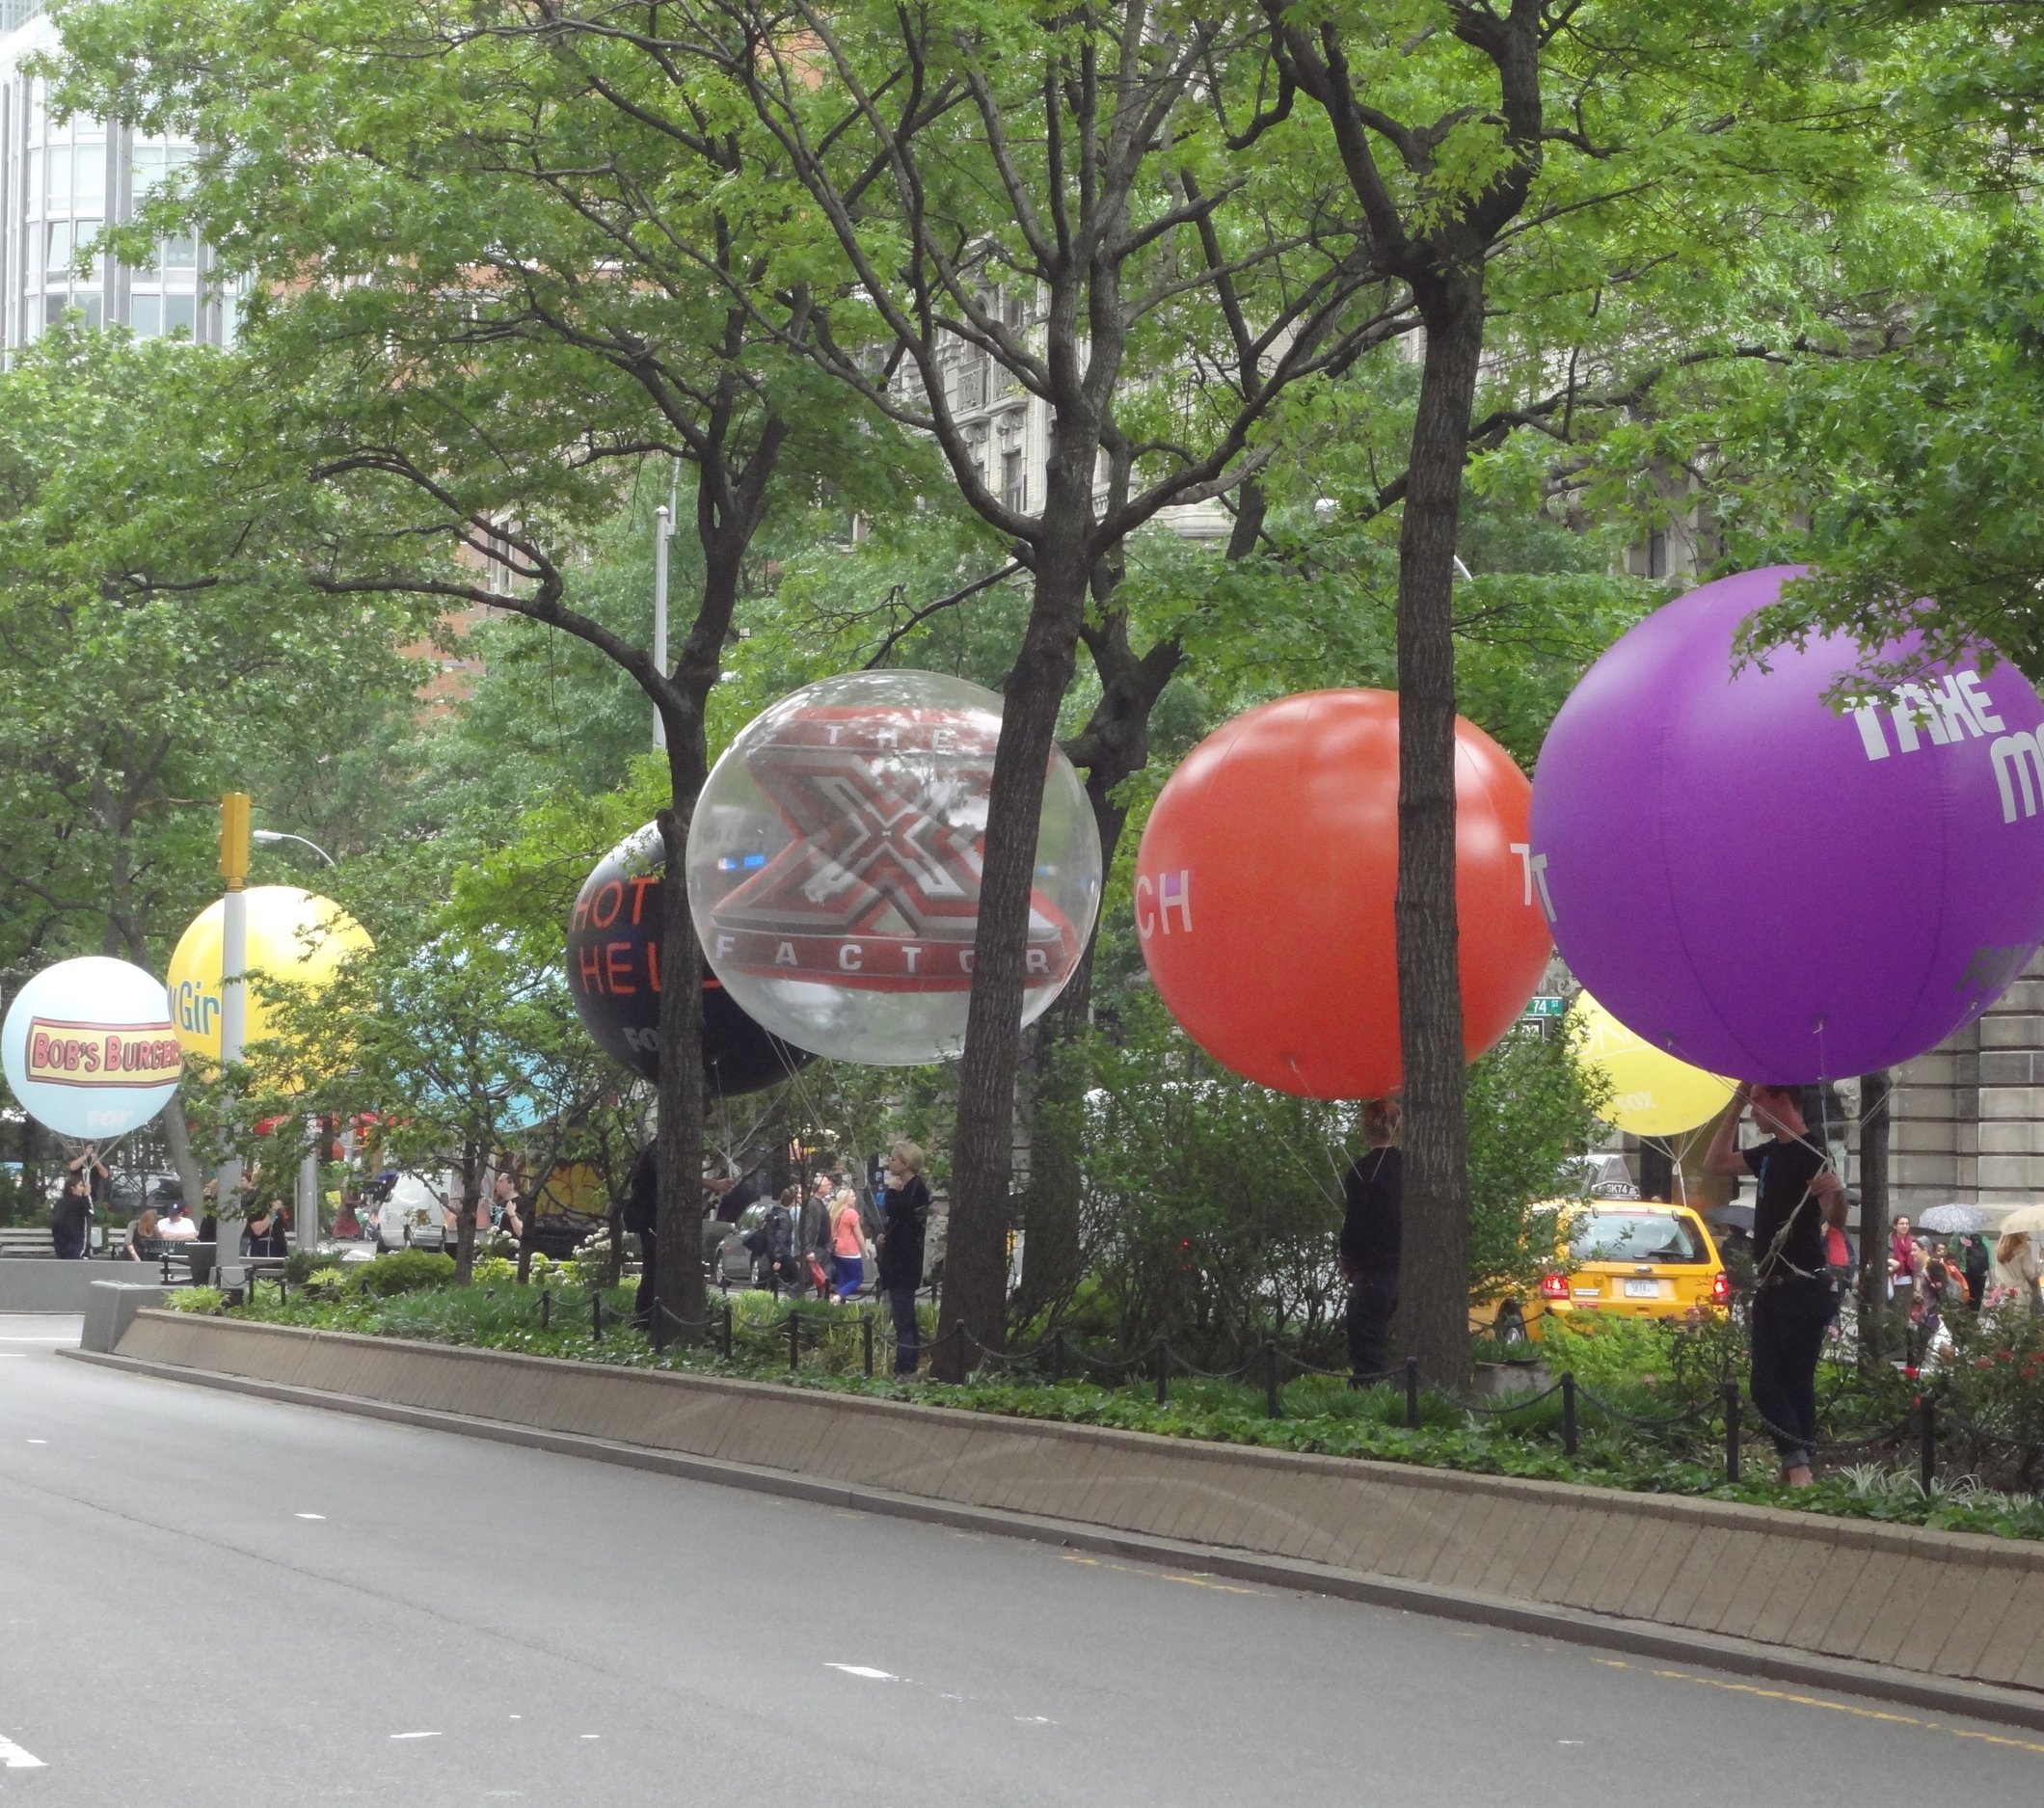 Giant ad balloons